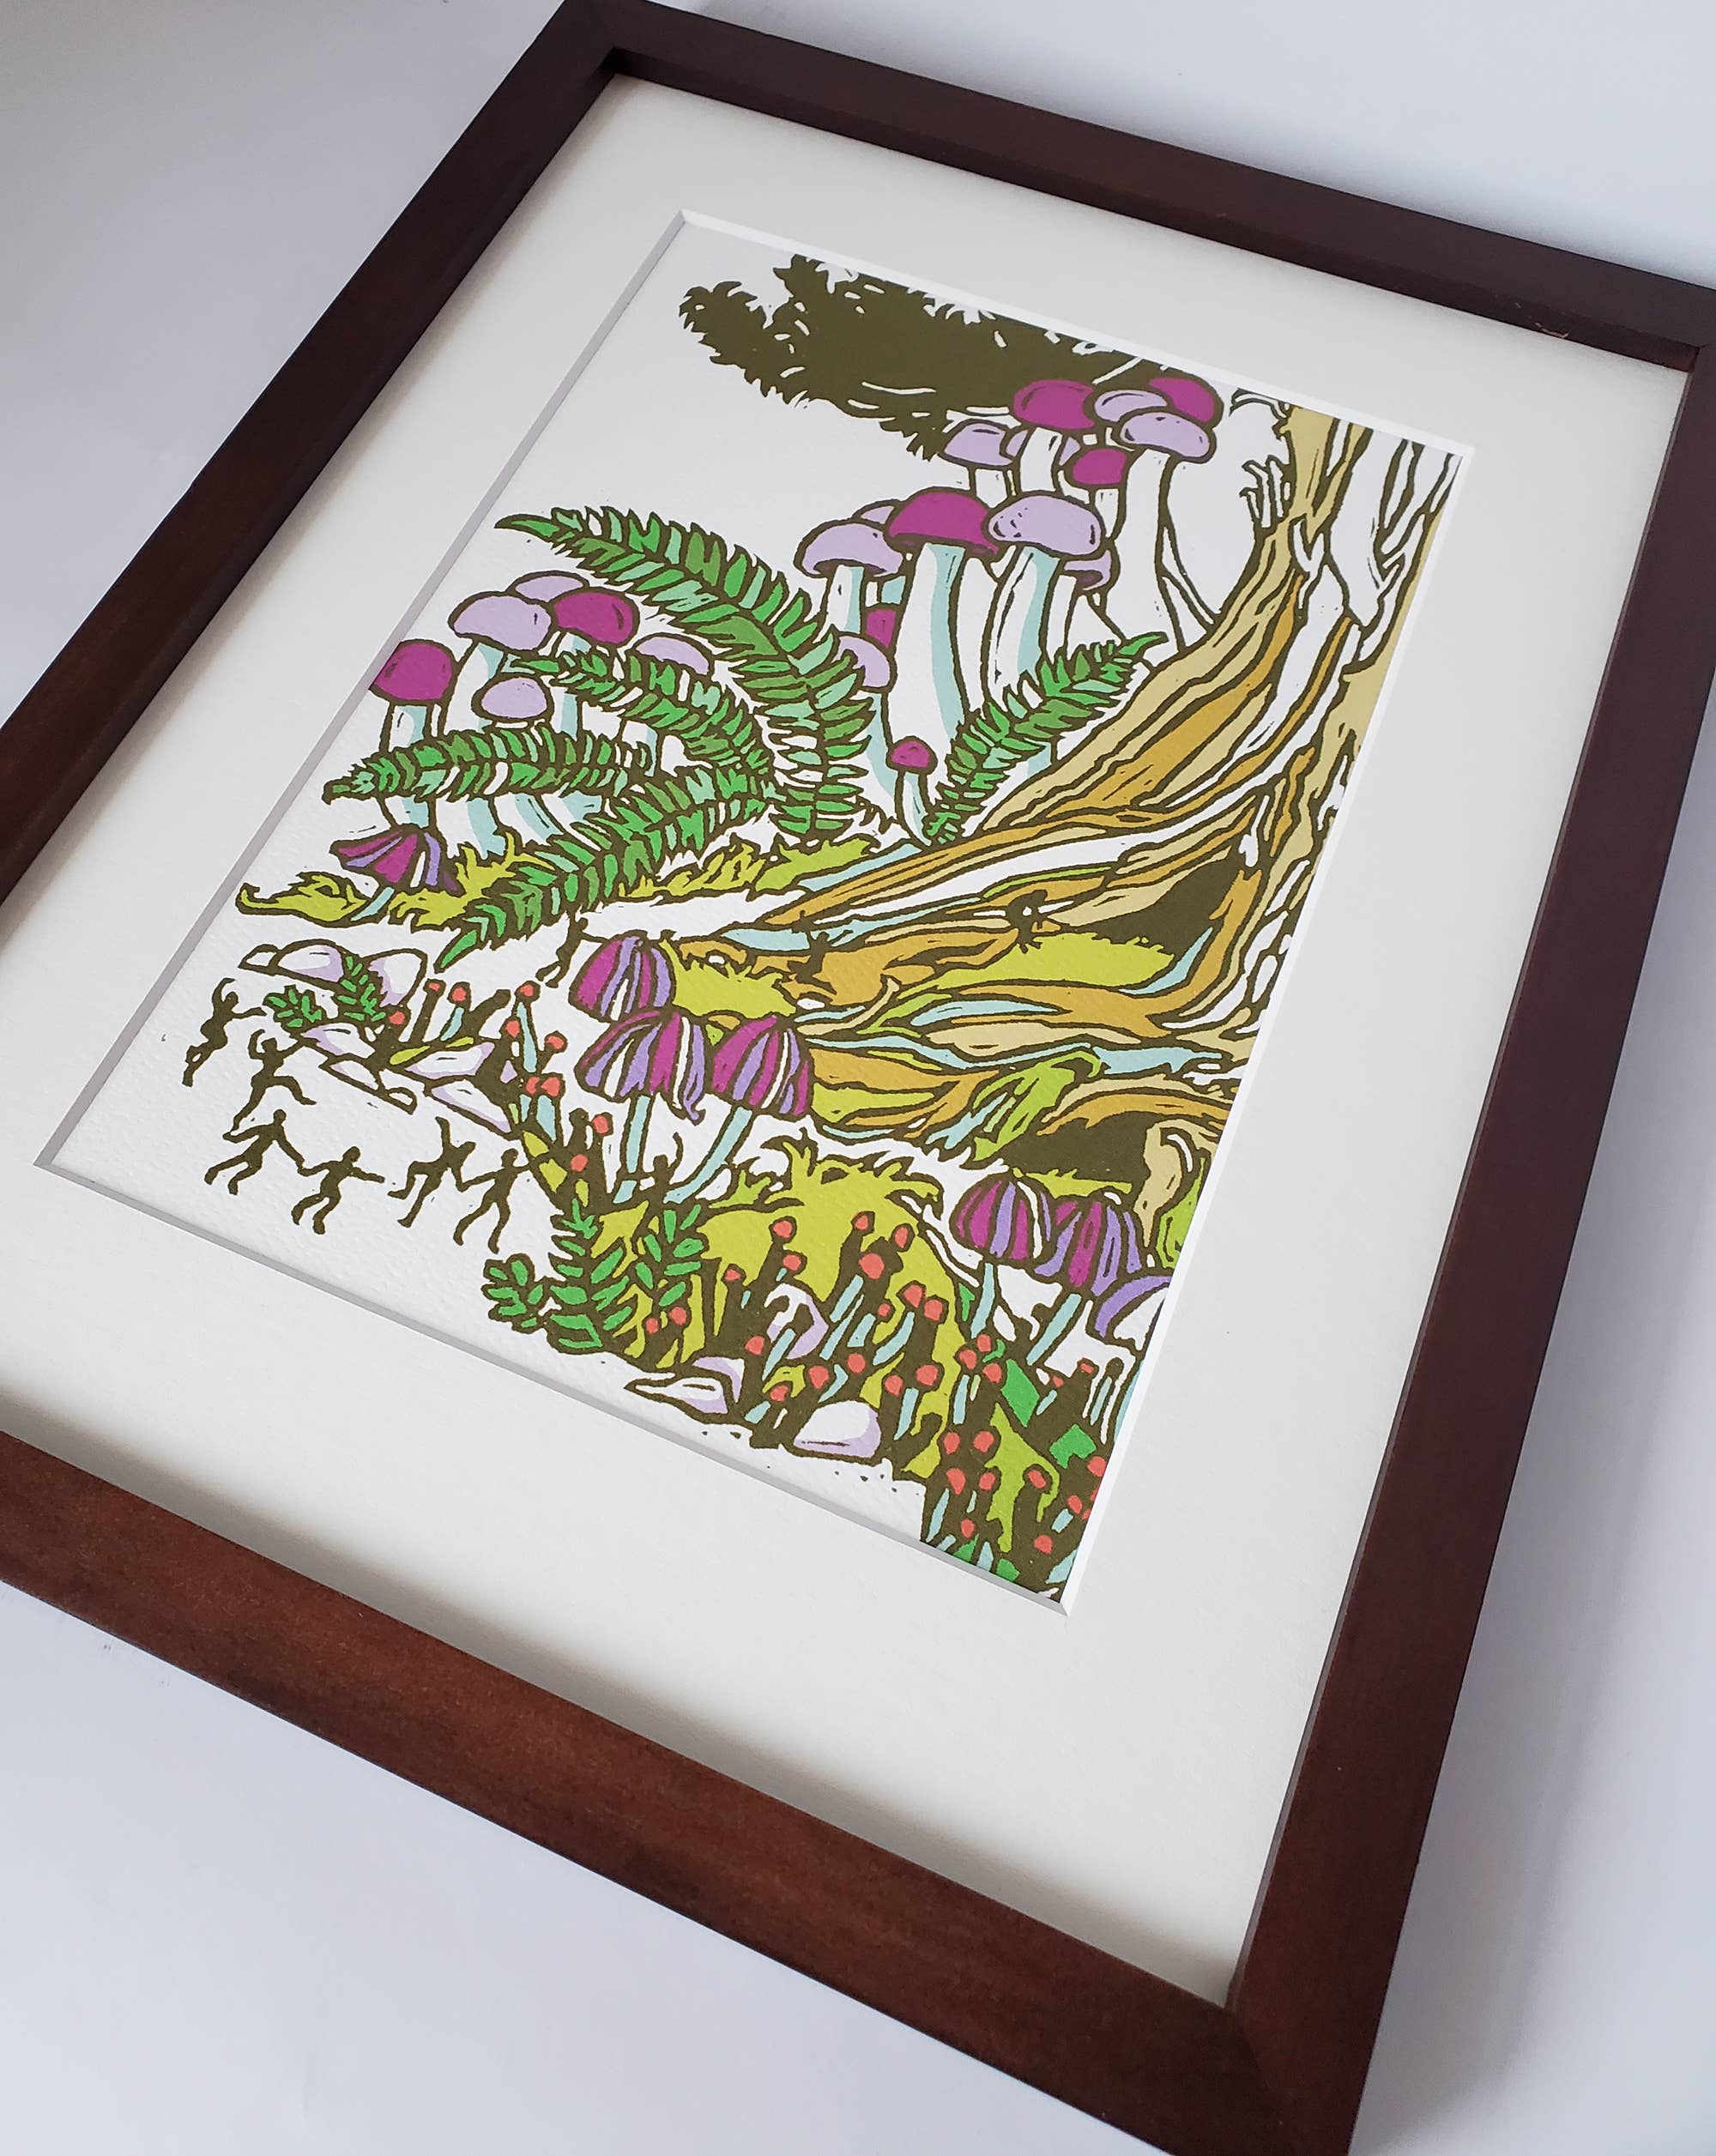 Mushroom Landscape Matted Art Print, Block Print Artwork